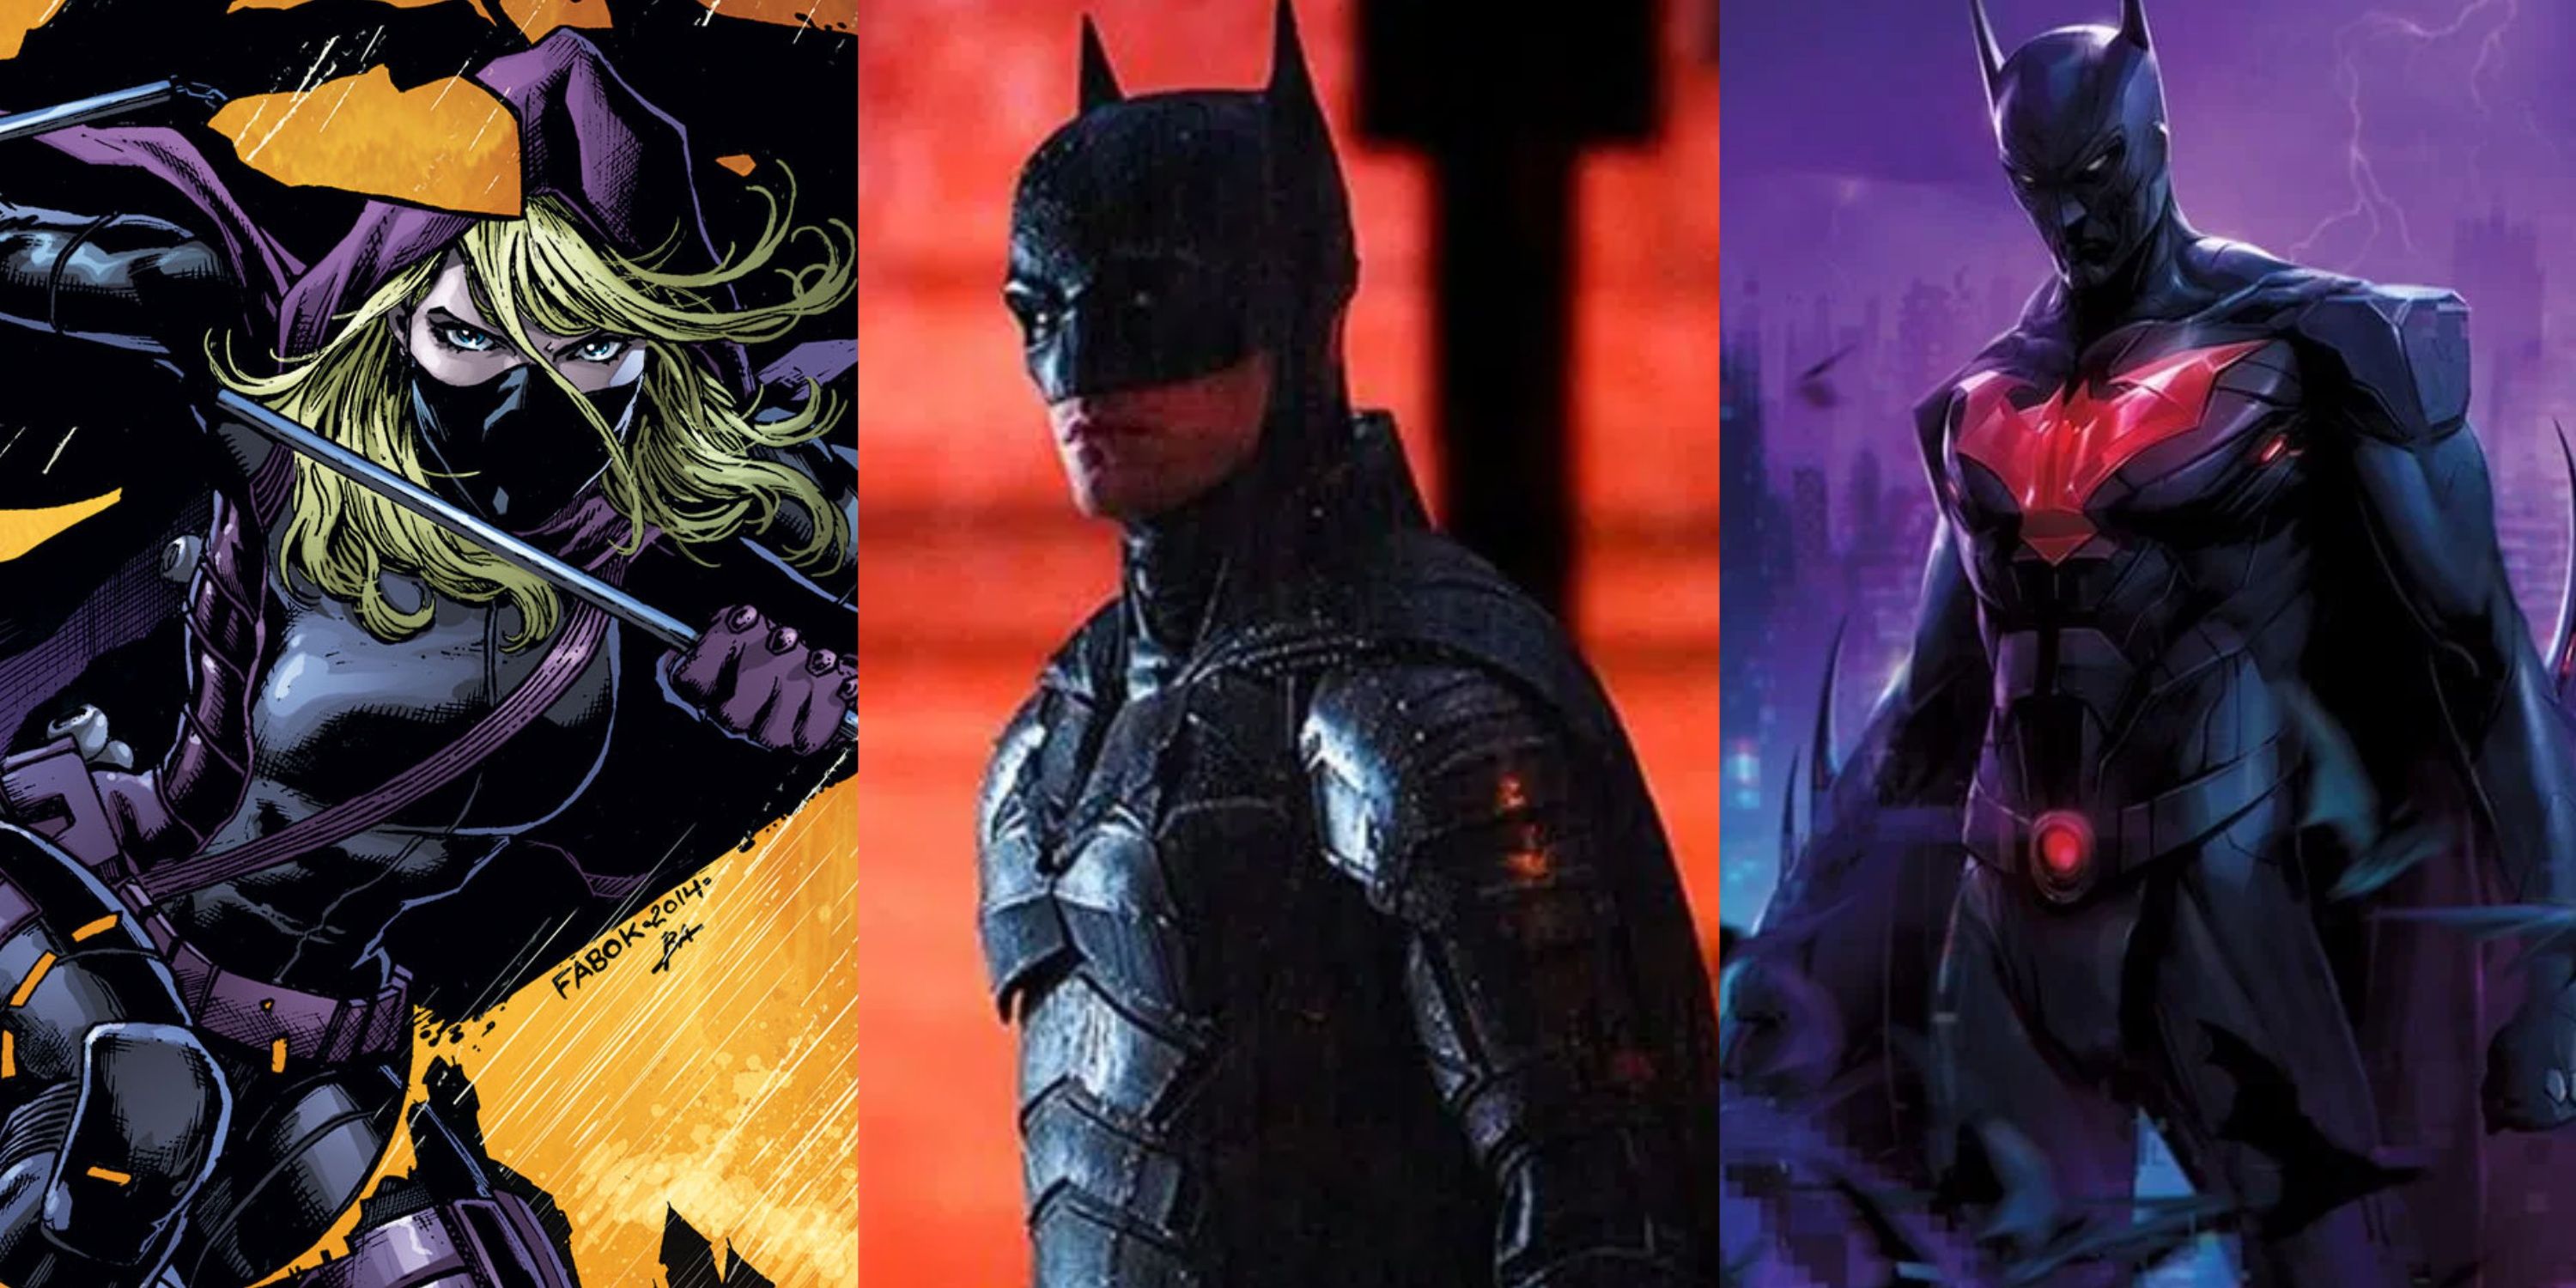 Split image of Spoiler, and Batman Beyond from DC Comics and Robert Pattinson's The Batman